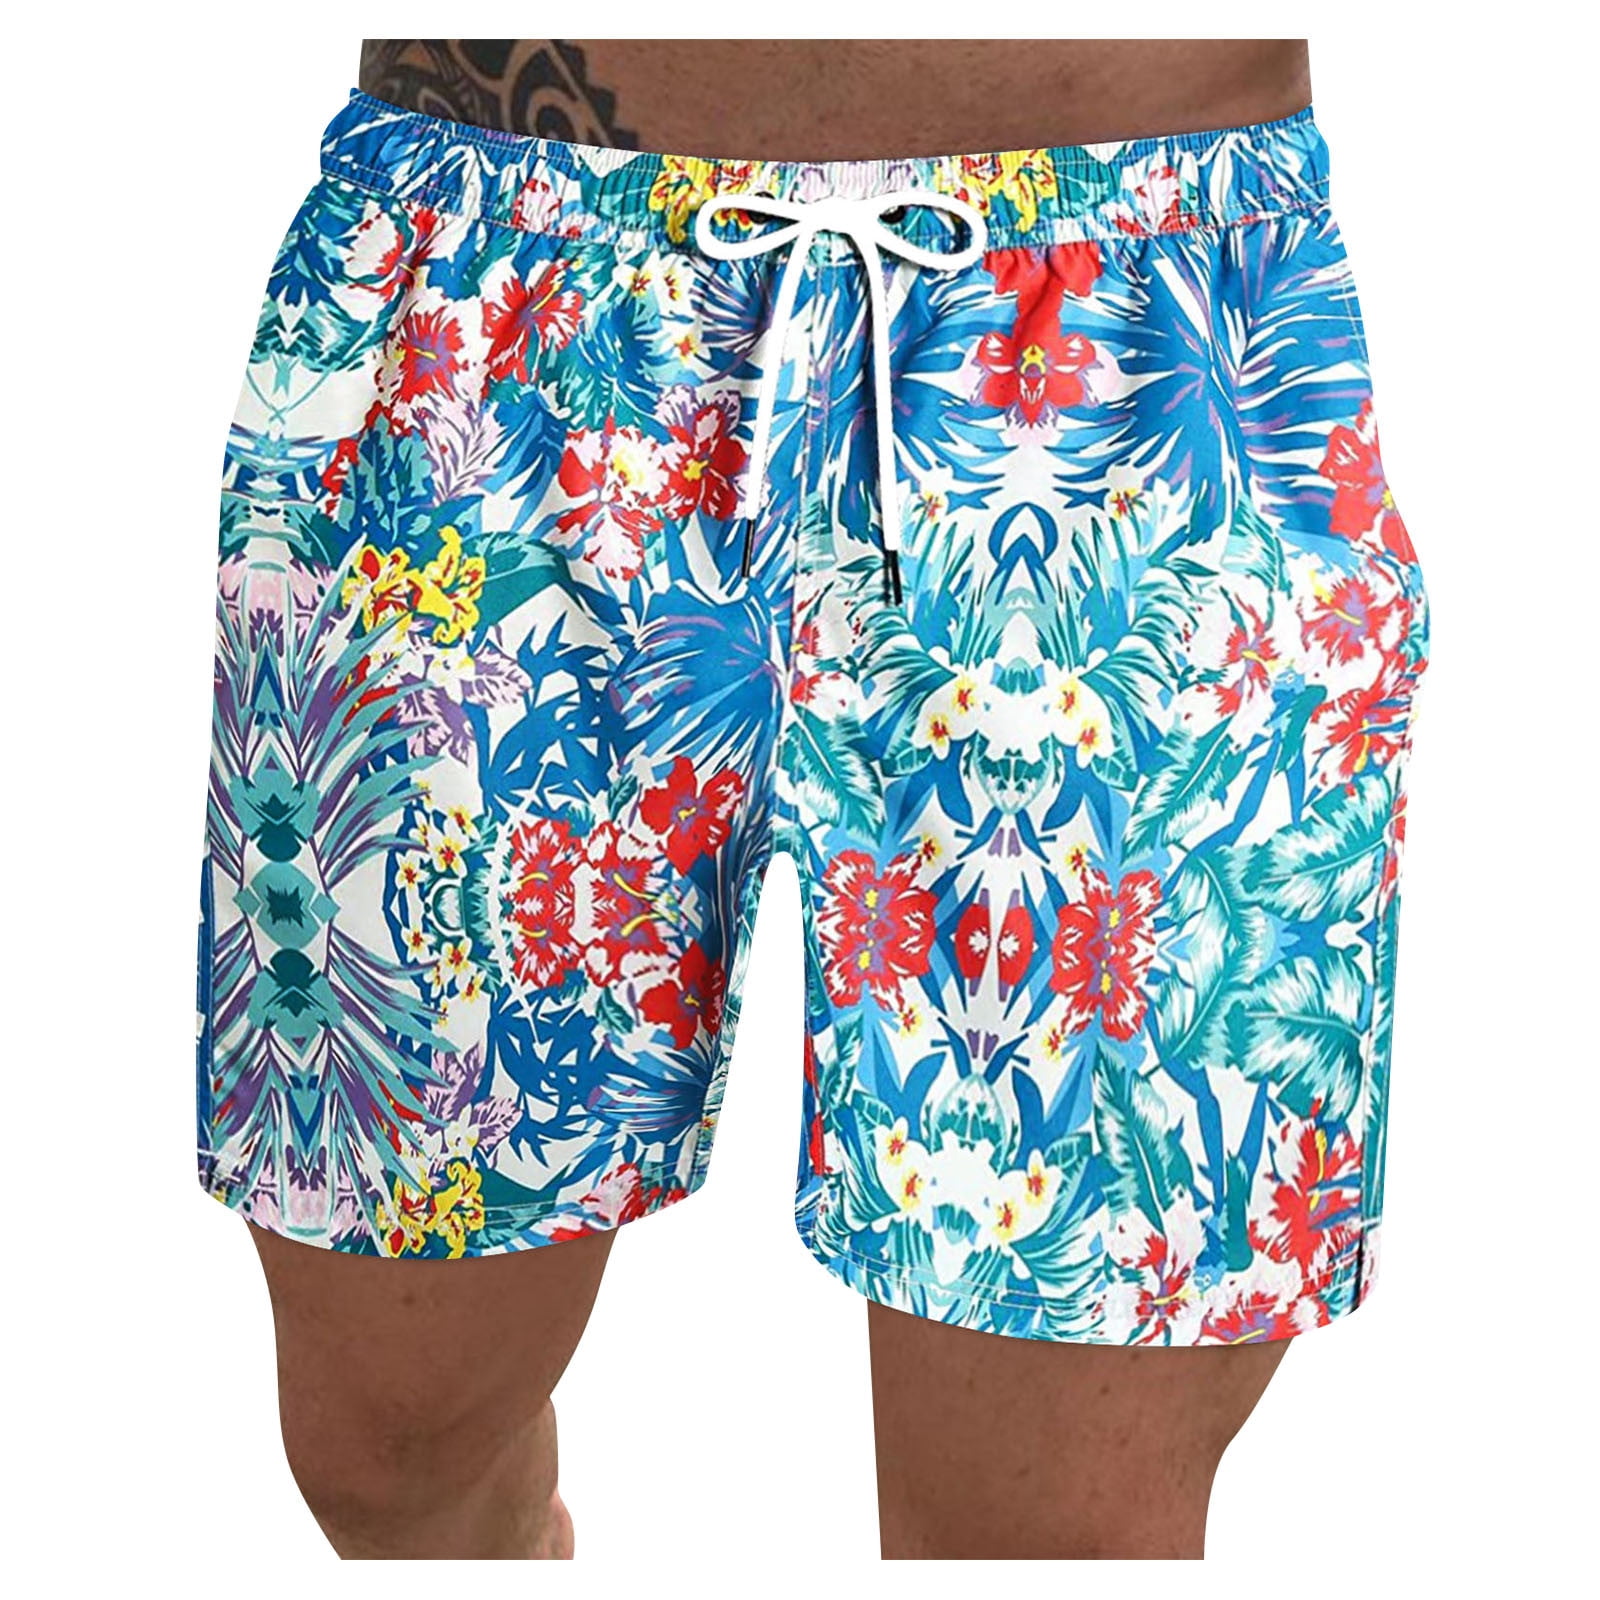 Teen Soft Hawaii Beach Tour Vintage Beach Shorts Swim Trunks Board Shorts